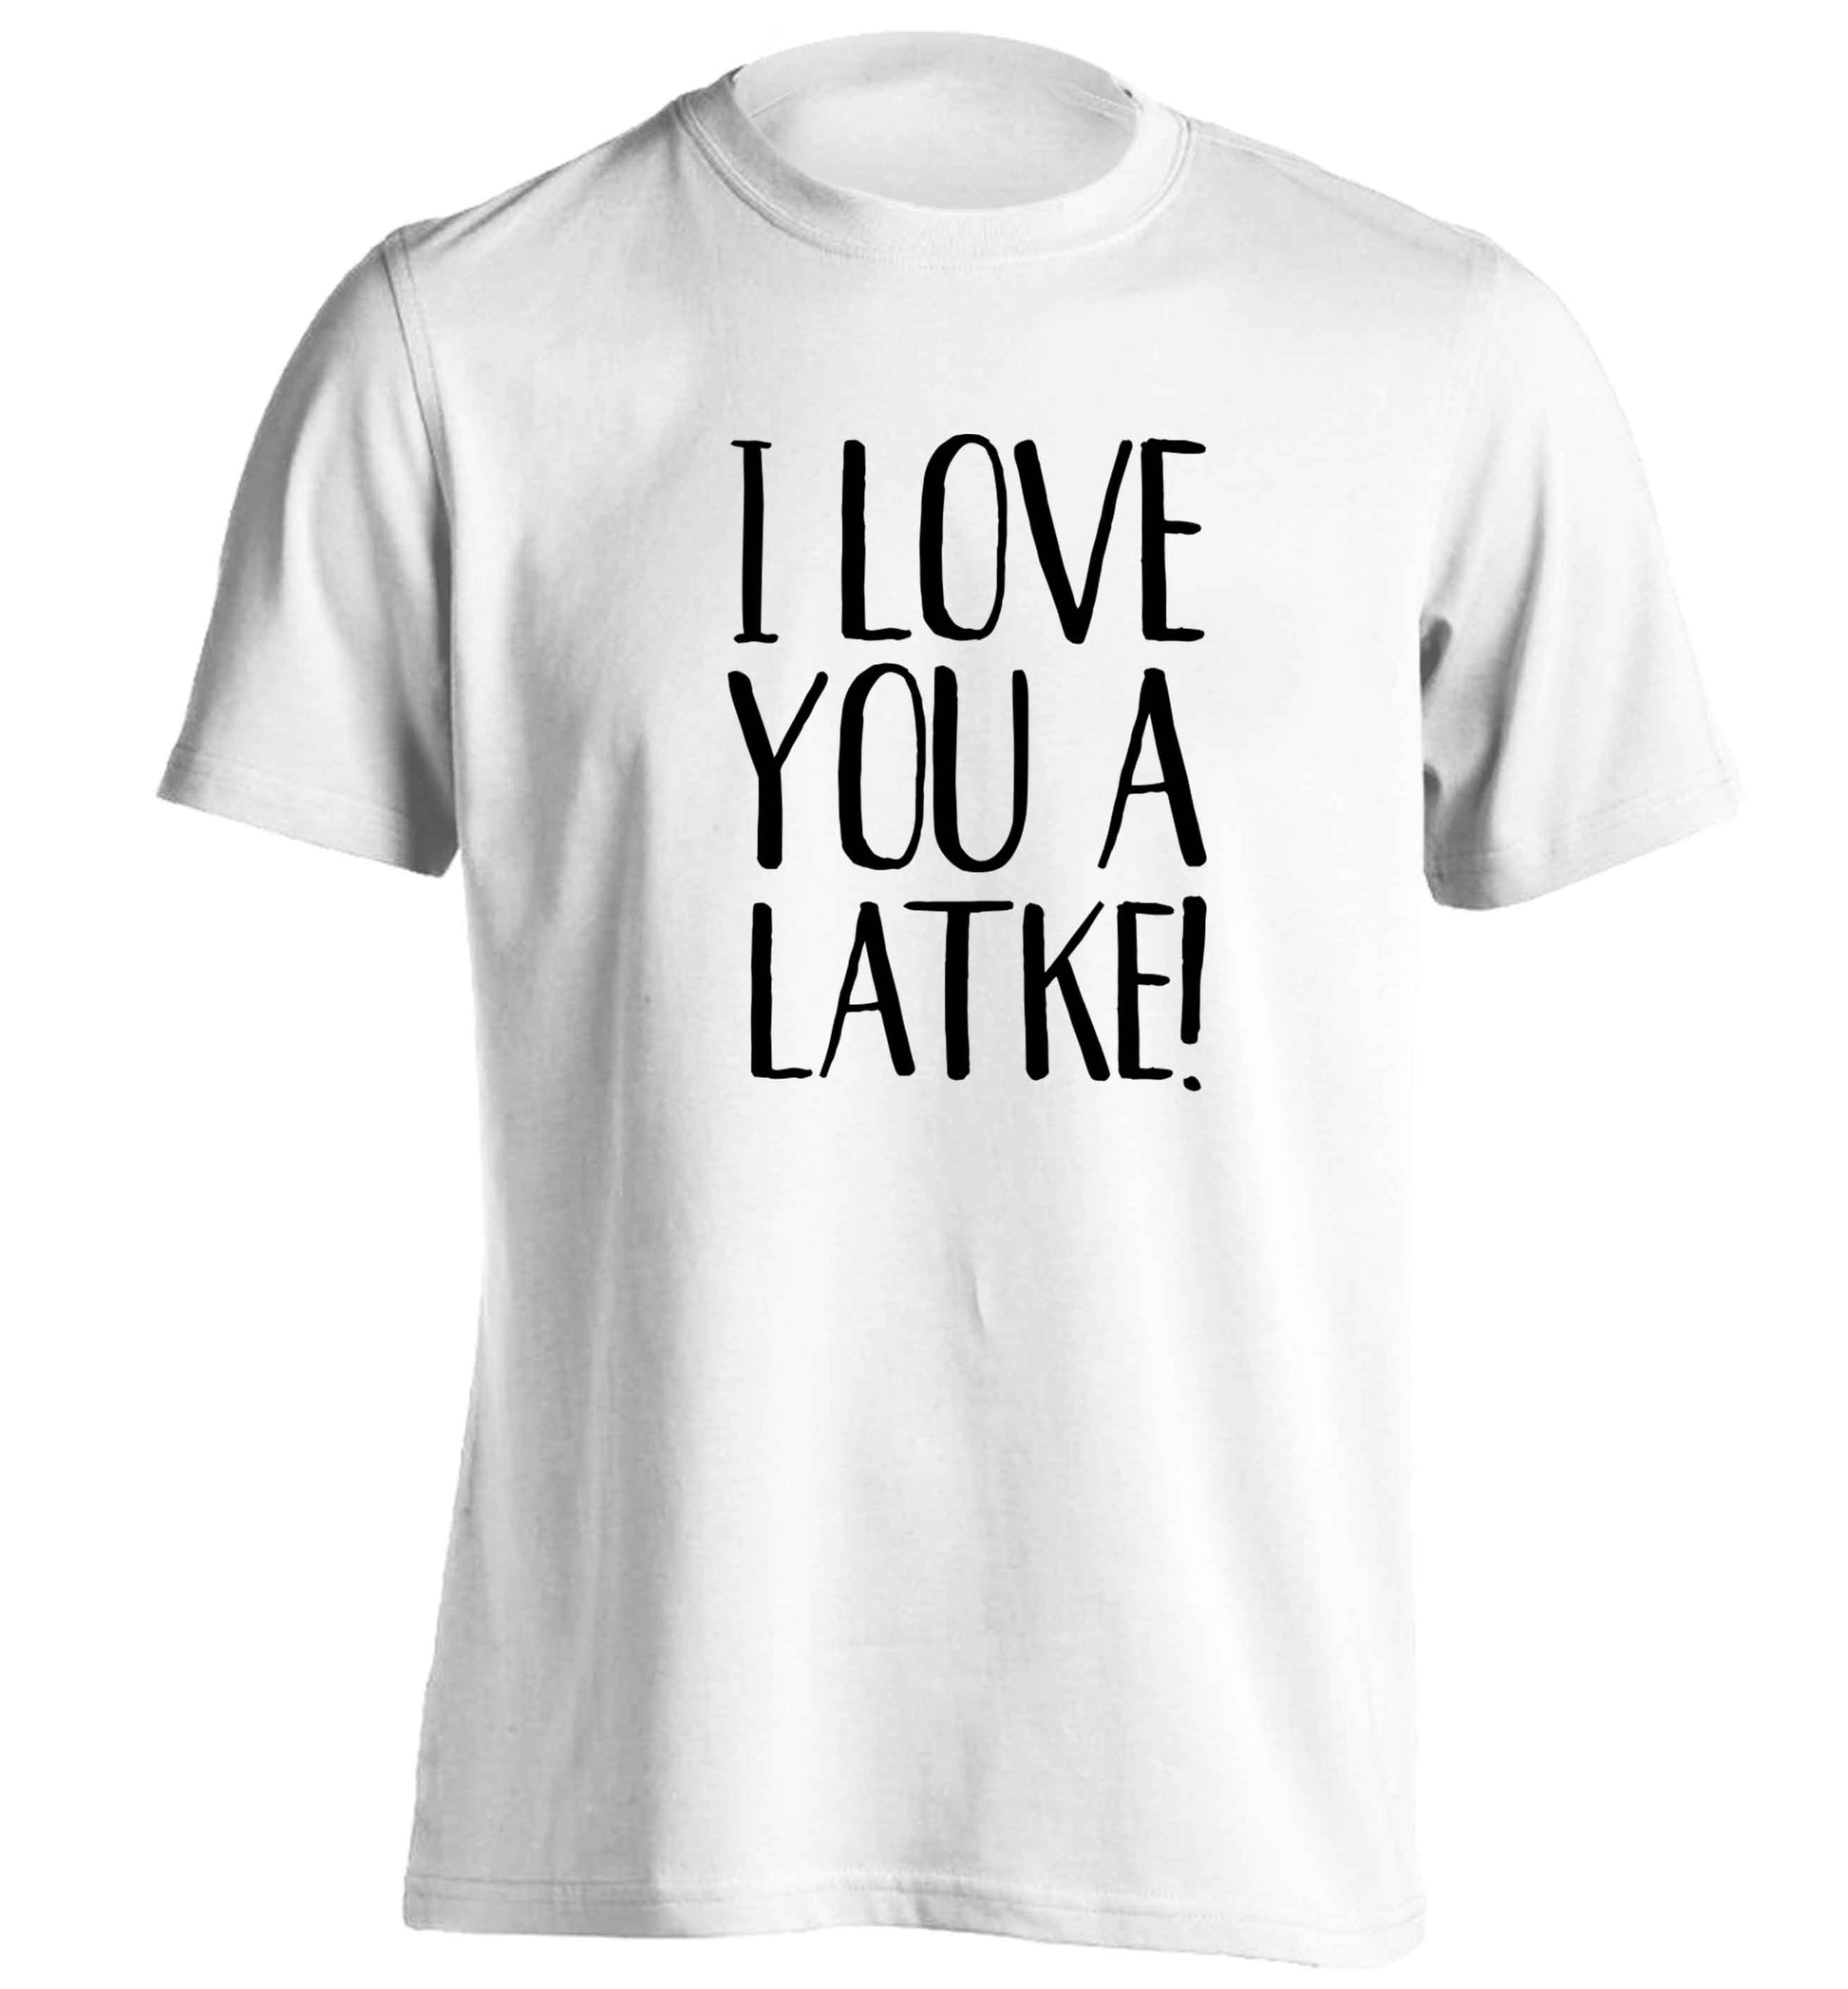 I love you a latke! adults unisex white Tshirt 2XL